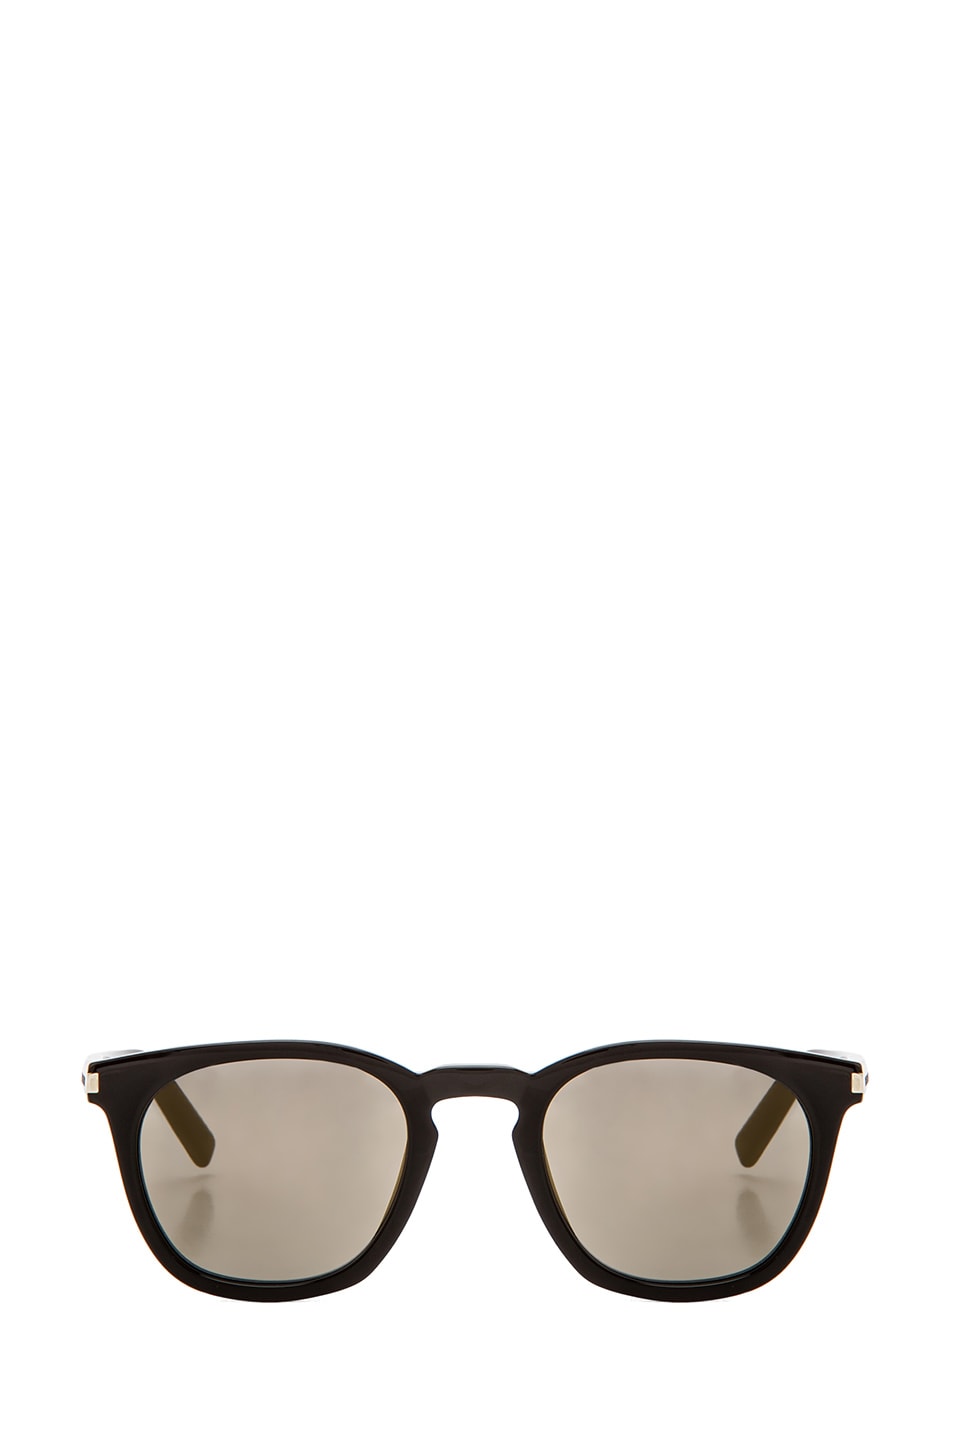 Saint Laurent Classic 28 Sunglasses in Black & Grey Brown Mirror | FWRD